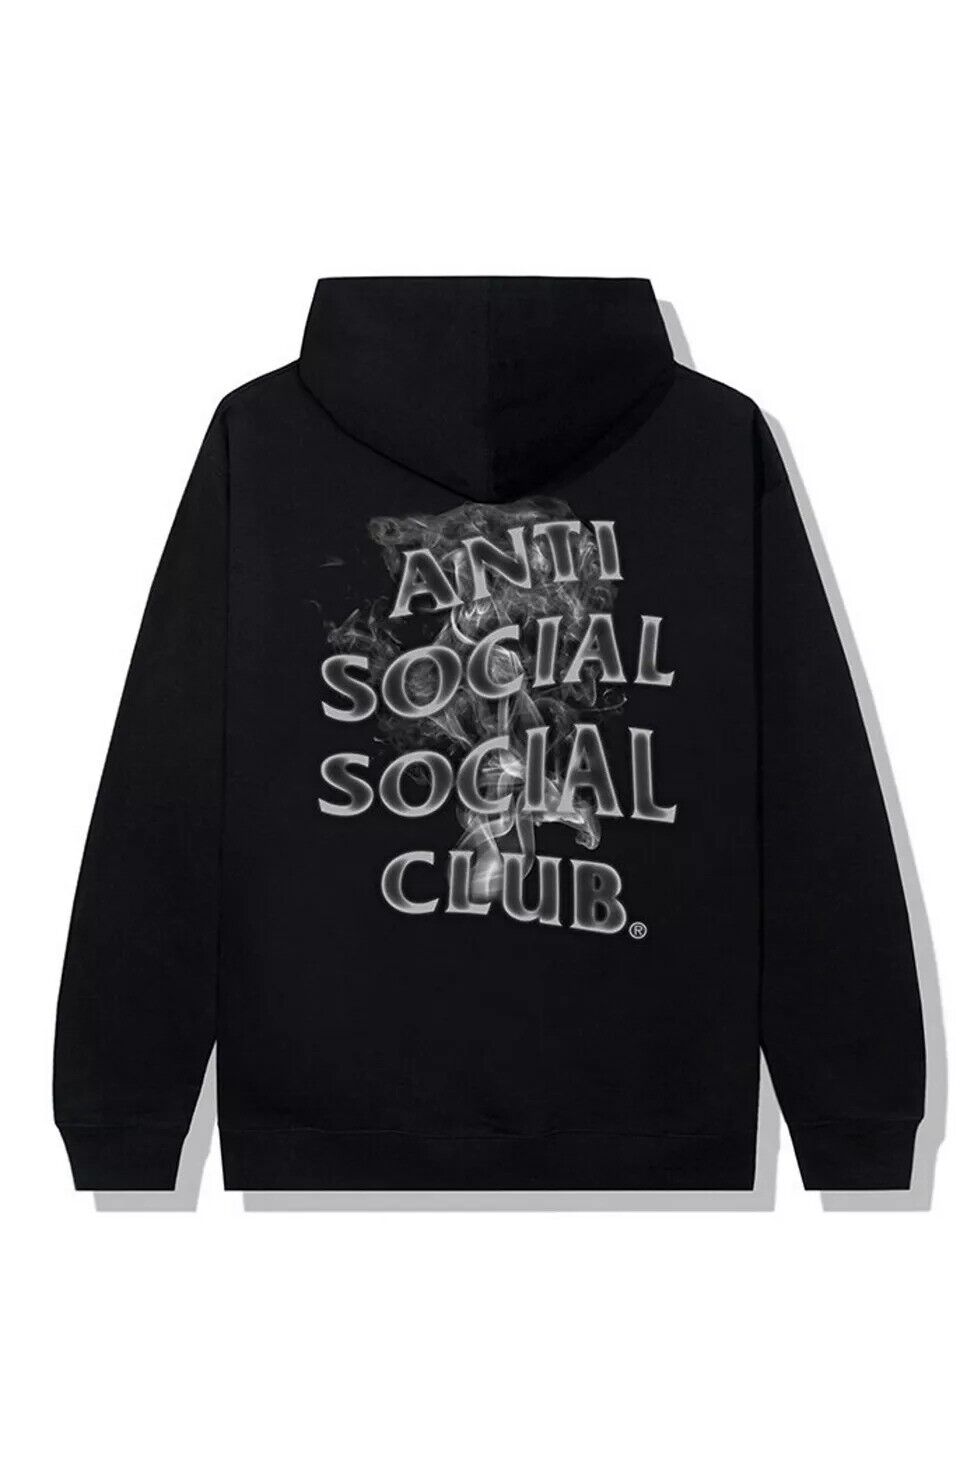 Anti Social Social Club Burnouts Hoodie Black Sz 2XL